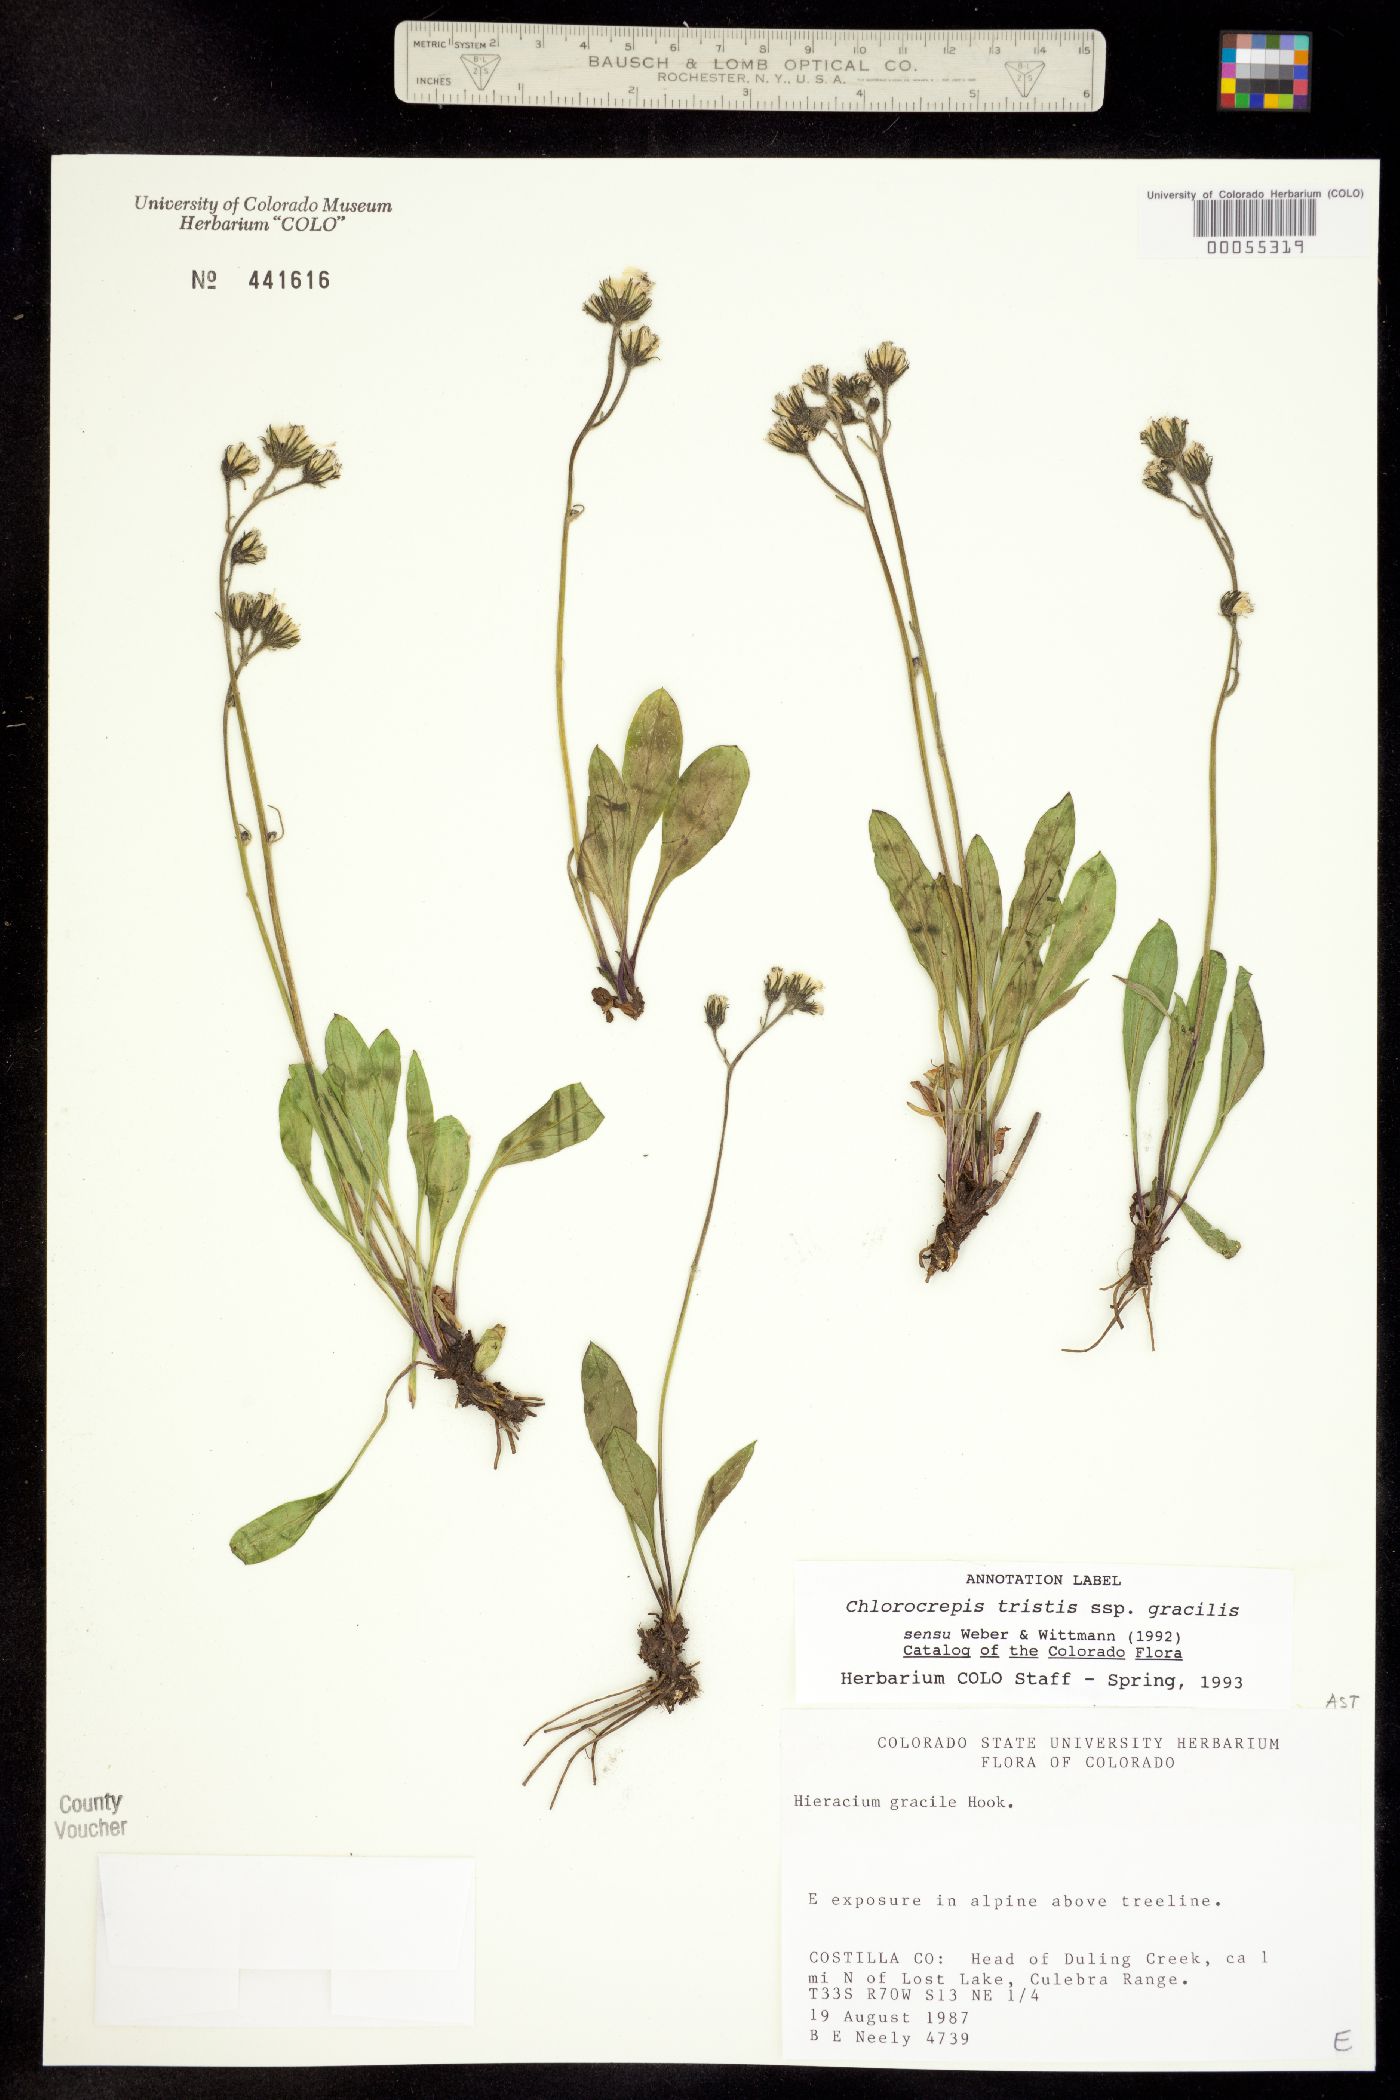 Chlorocrepis tristis ssp. gracilis image